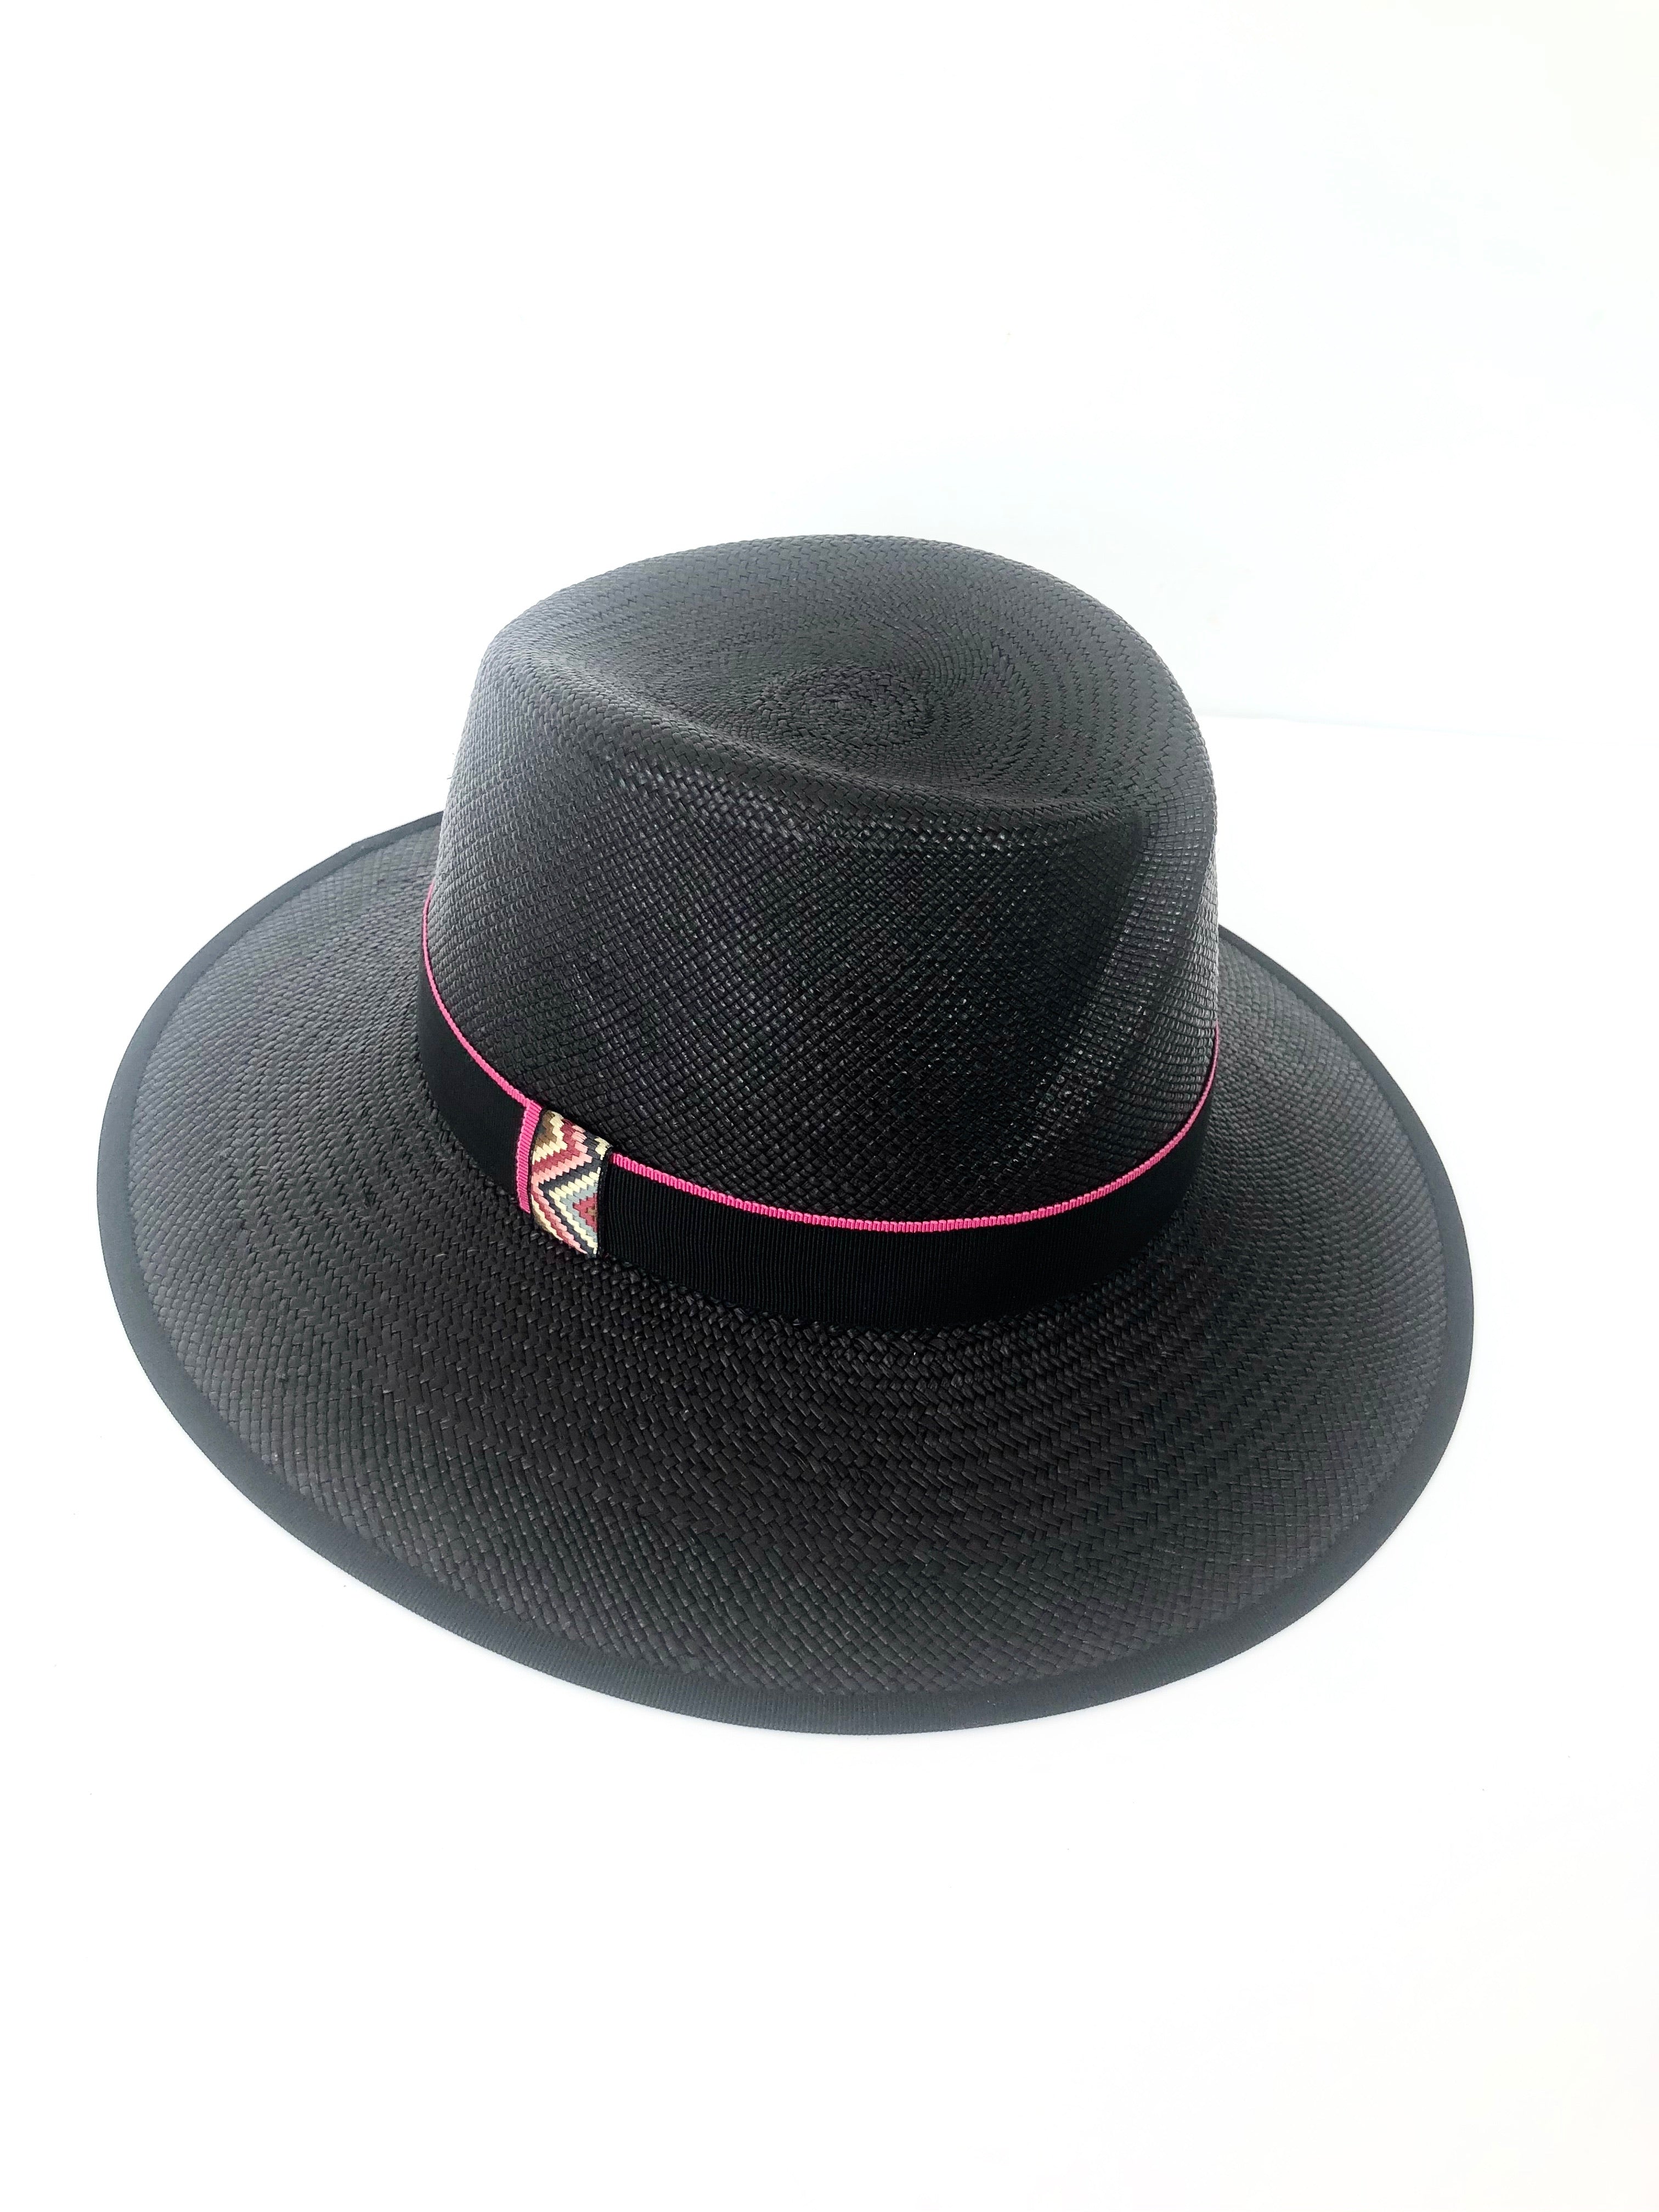 black panama wide brimmed fedora hat with crown over crown, ladies sun hat